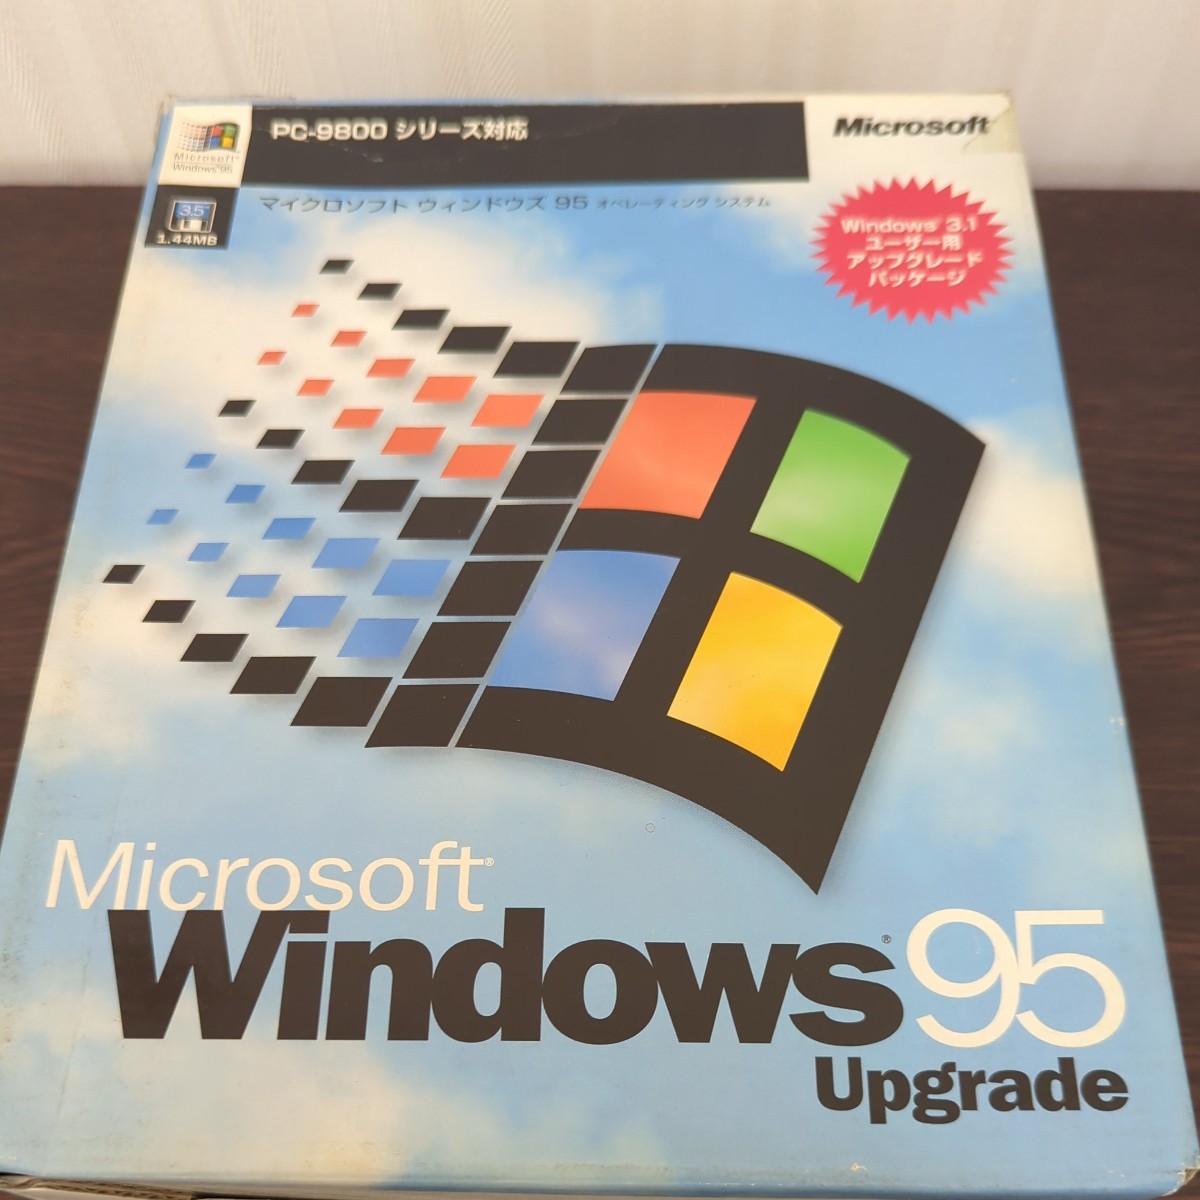 505h0219 Microsoft Windows95 アップグレード PC-9800シリーズ対応 3.5 DMF PC-98 1.44MB 3.5インチFD版の画像1